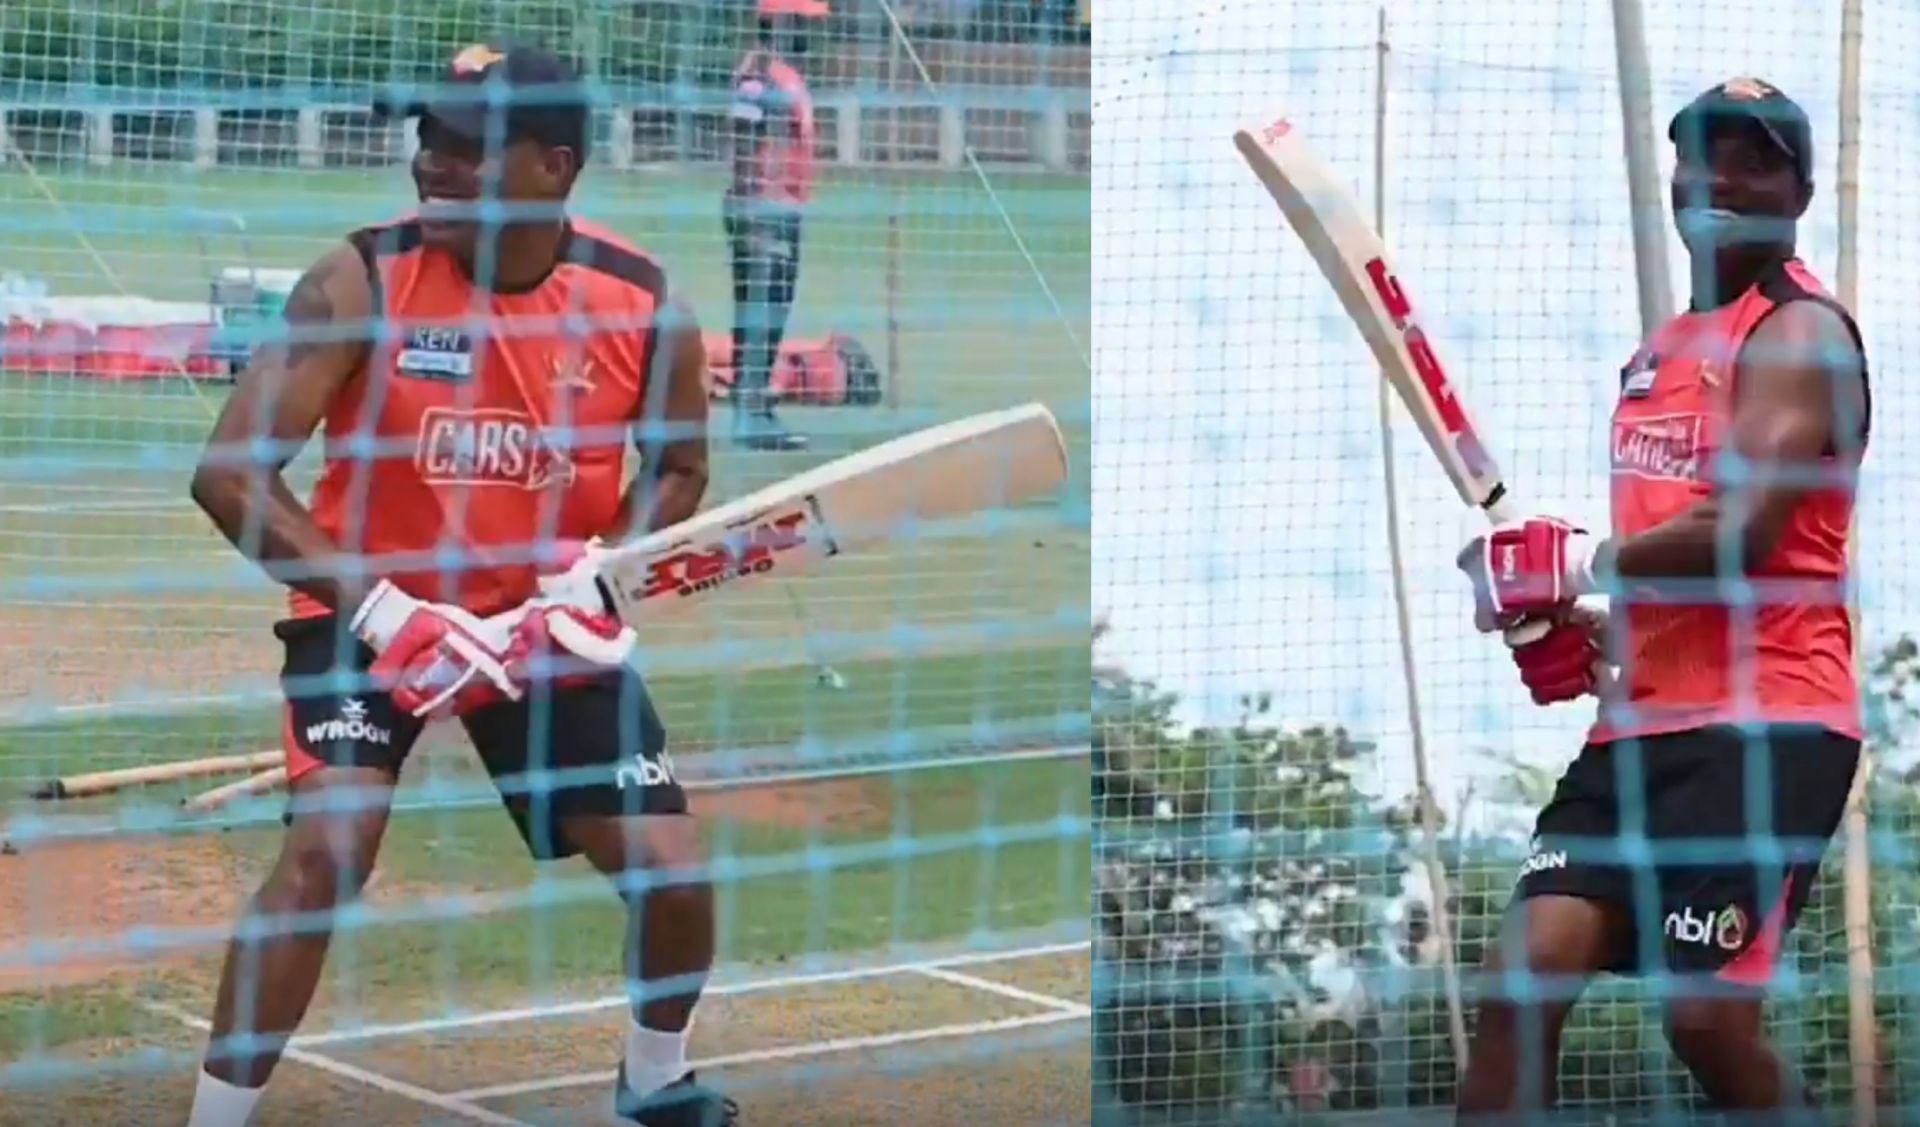 Brian Lara batting in the nets (PC: Instagram)